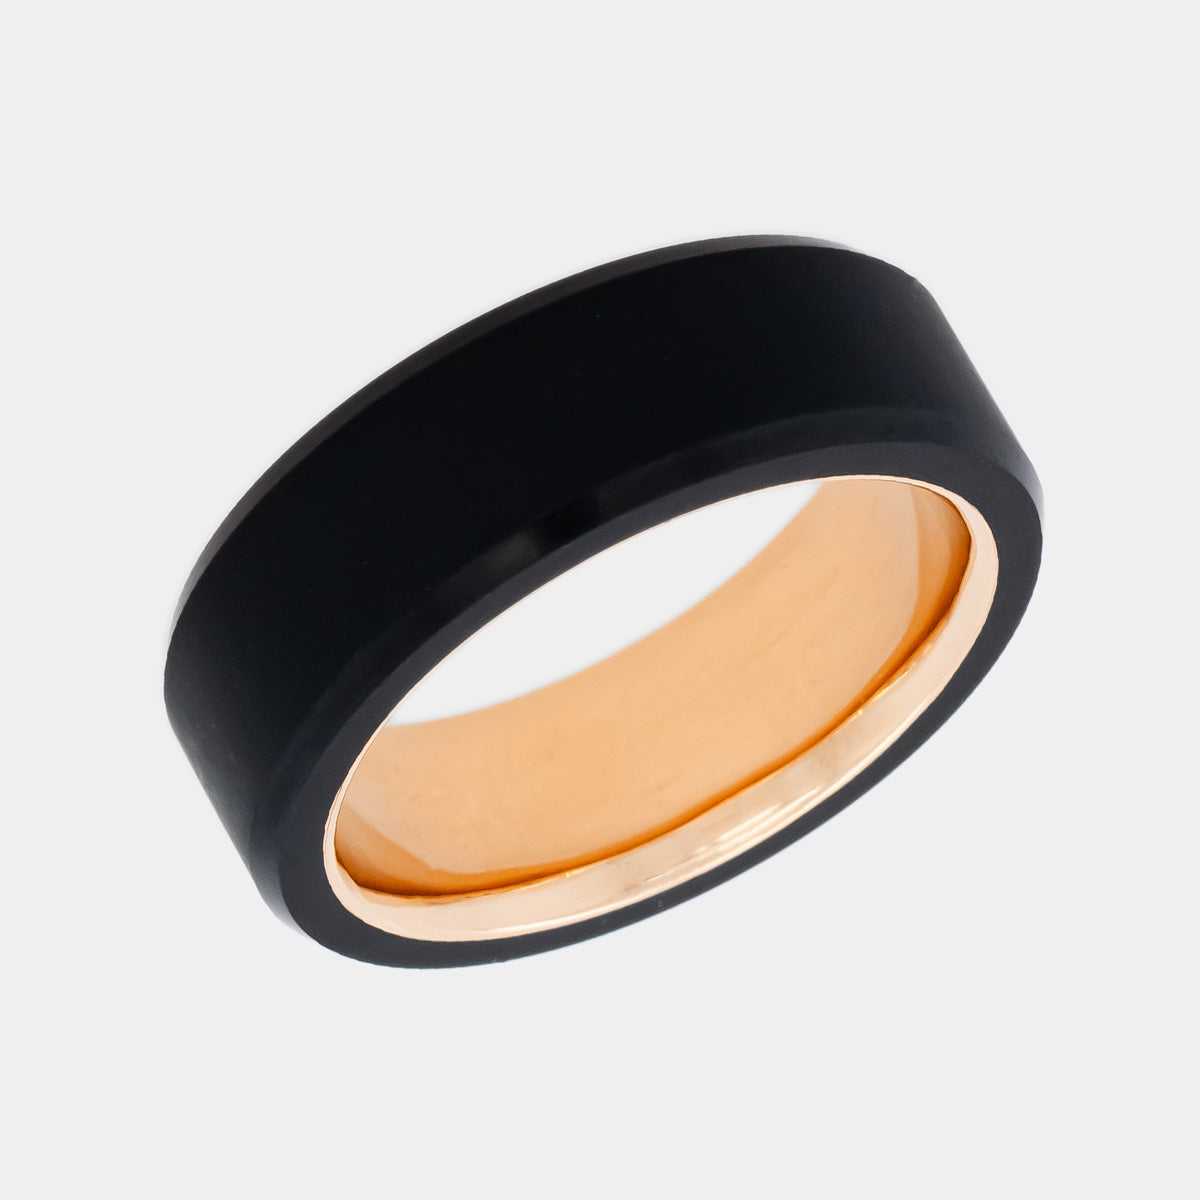 Solid Black Diamond Ring with a 14k Rose Gold Sleeve on White Background | Elysium Black Diamond Ring - Ares 8mm | Rose Gold and Black Diamond Ring | Products | Image 1